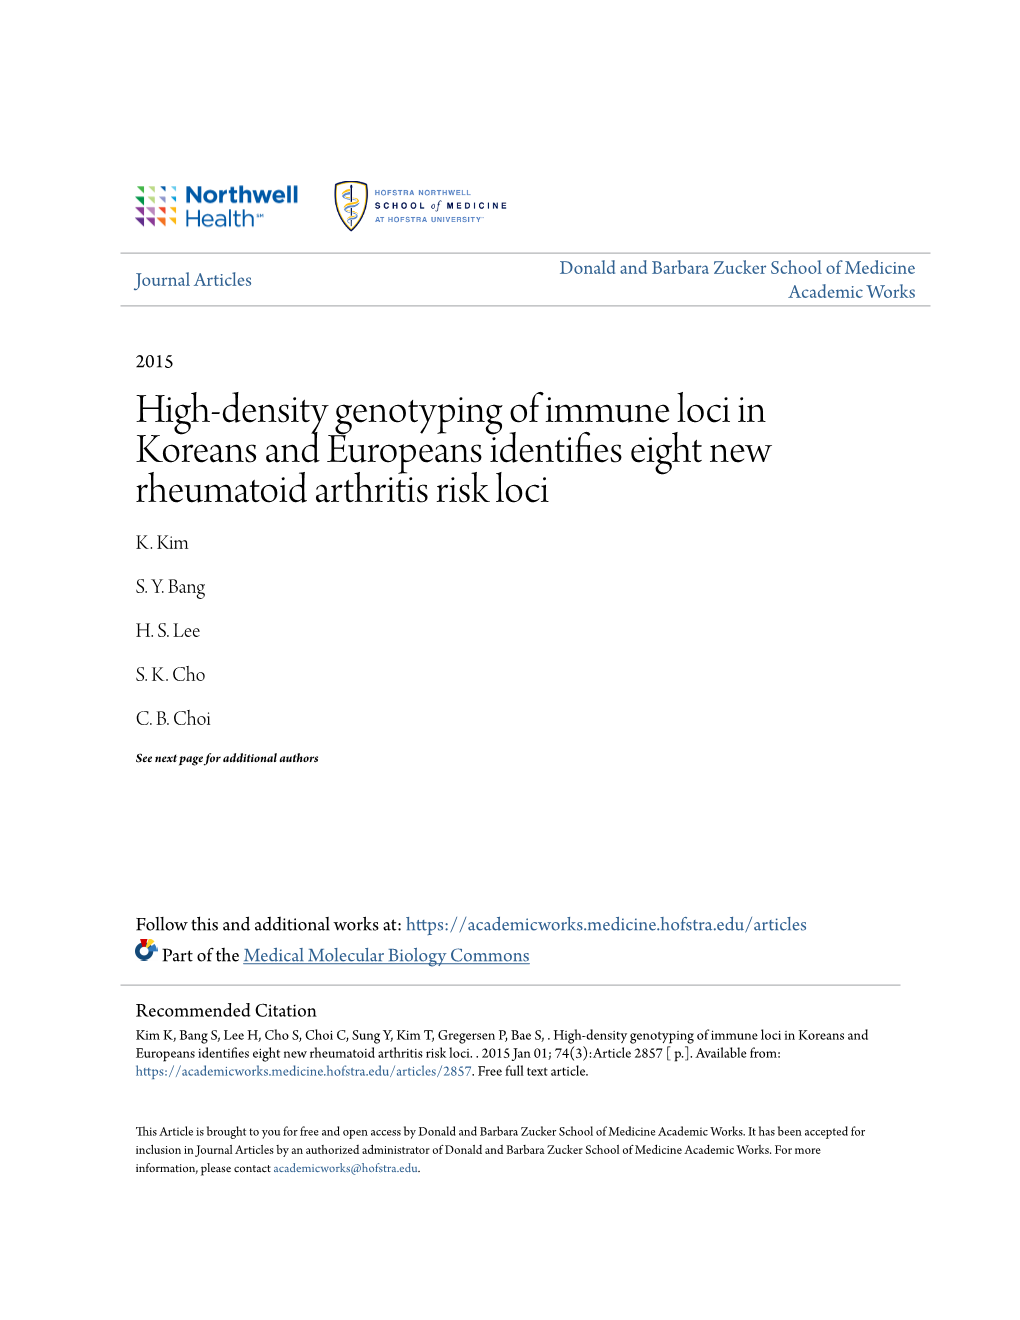 High-Density Genotyping of Immune Loci in Koreans and Europeans Identifies Eight New Rheumatoid Arthritis Risk Loci K